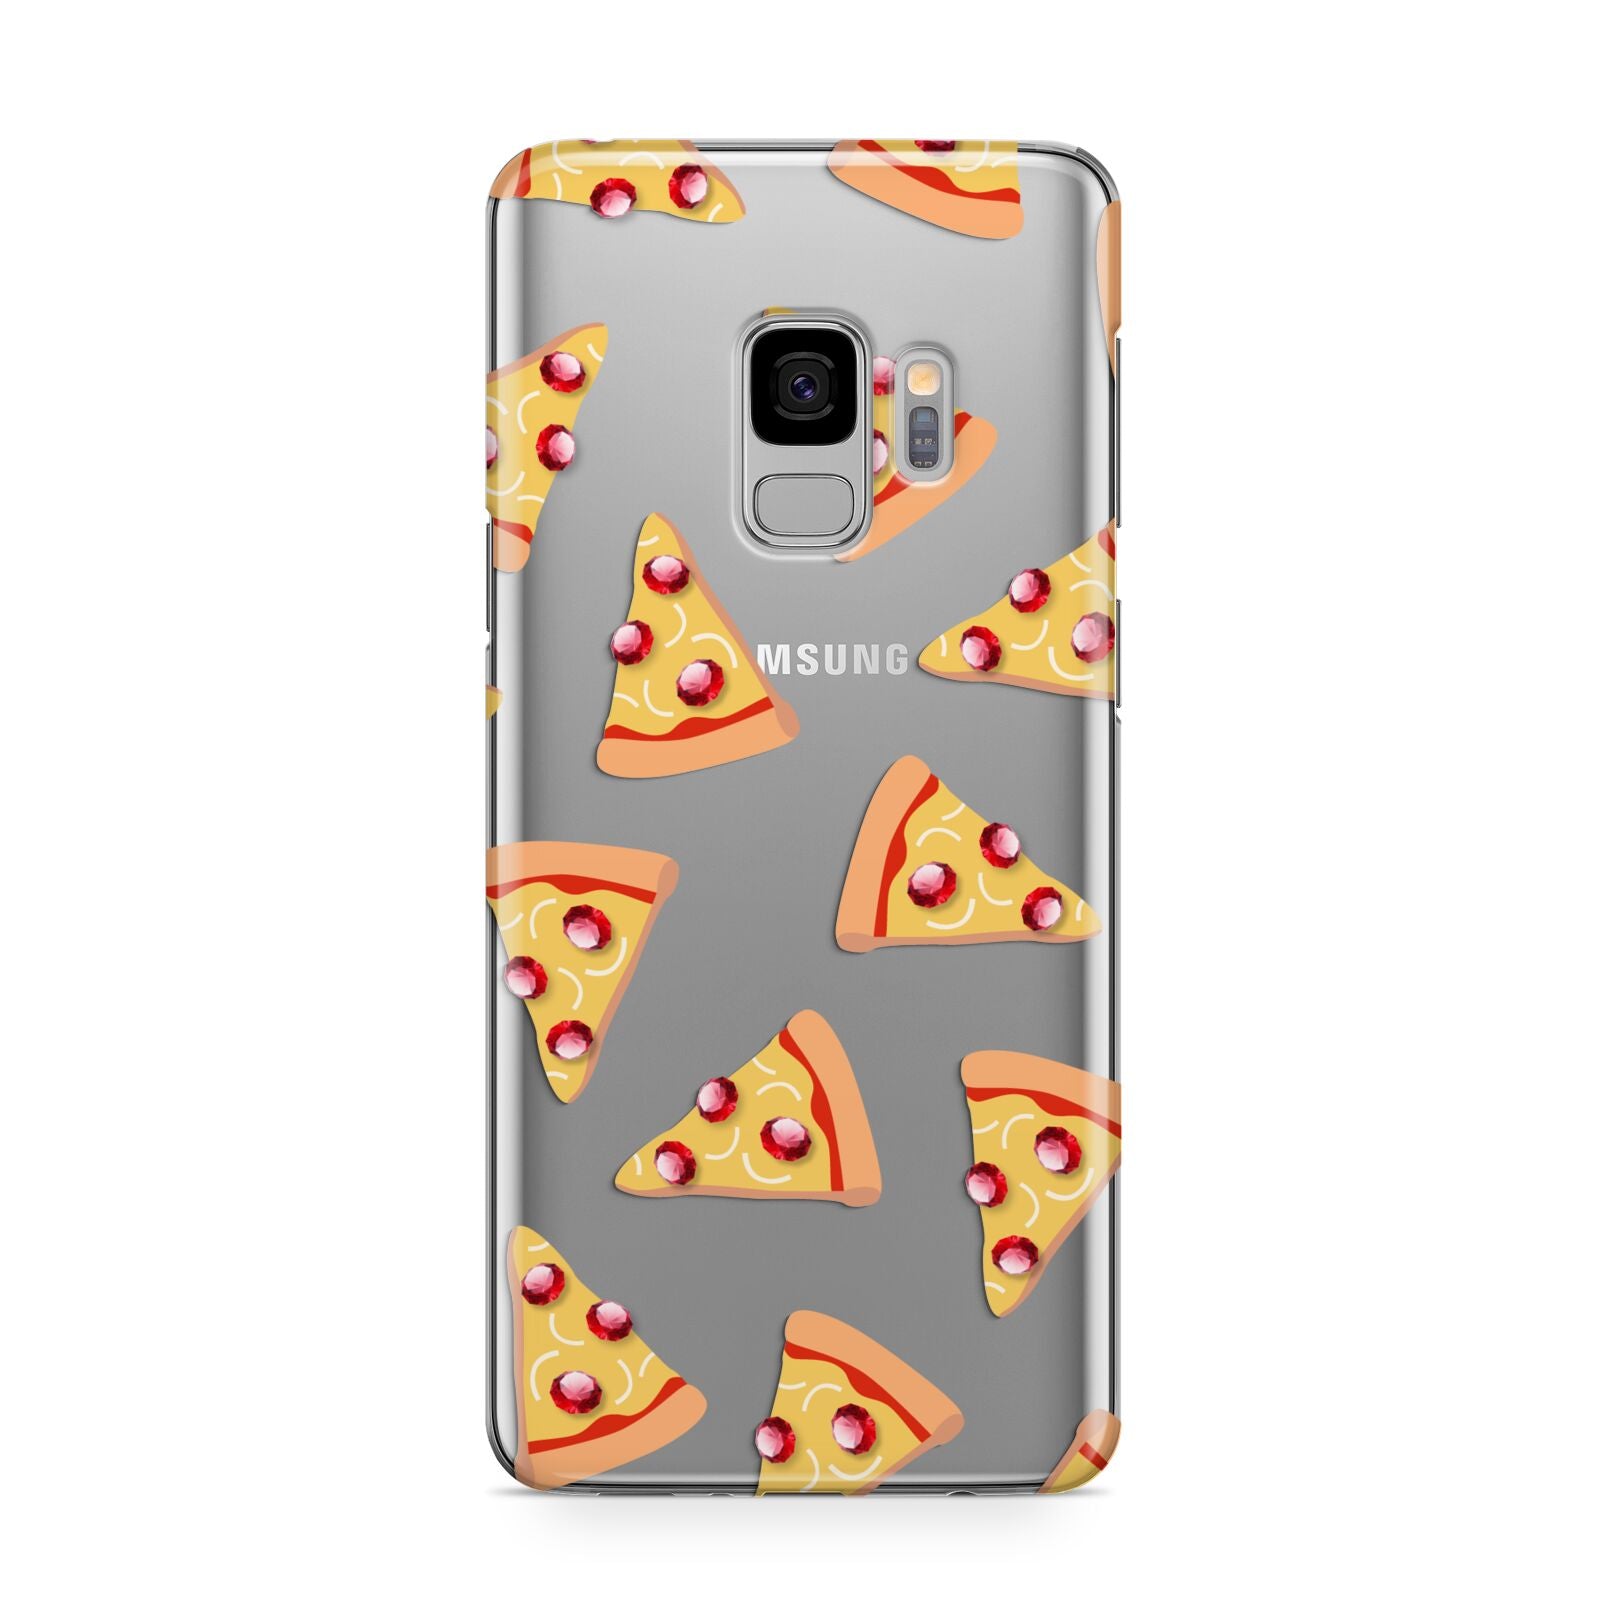 Rubies on Cartoon Pizza Slices Samsung Galaxy S9 Case